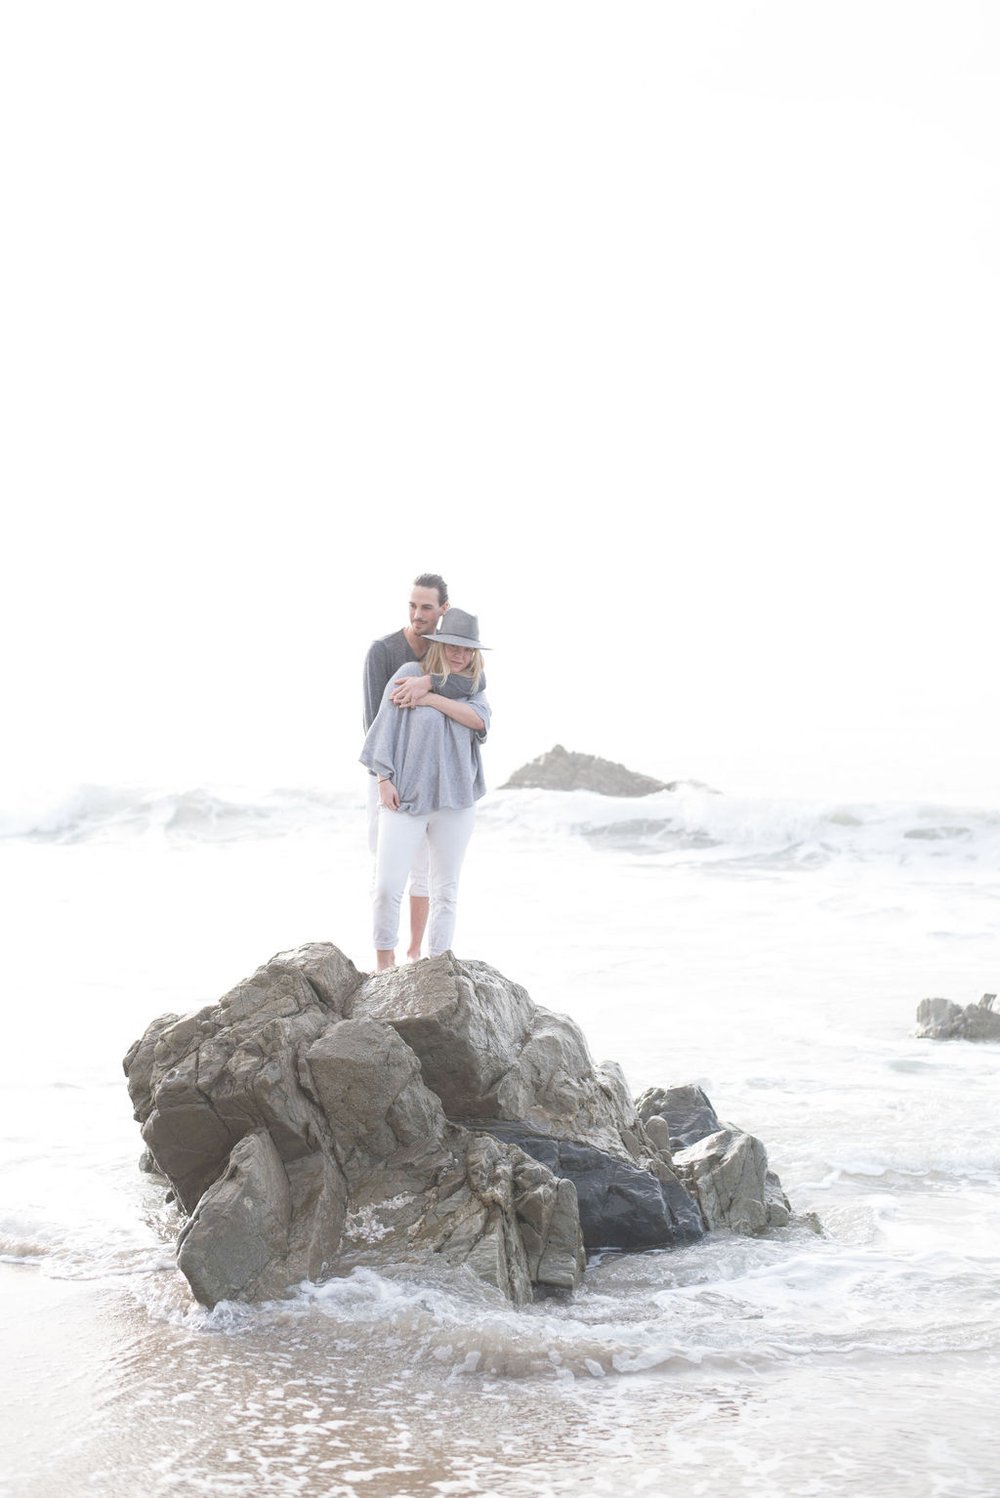 A personal event photographer capturing a Couple standing on an ocean rock.jpg